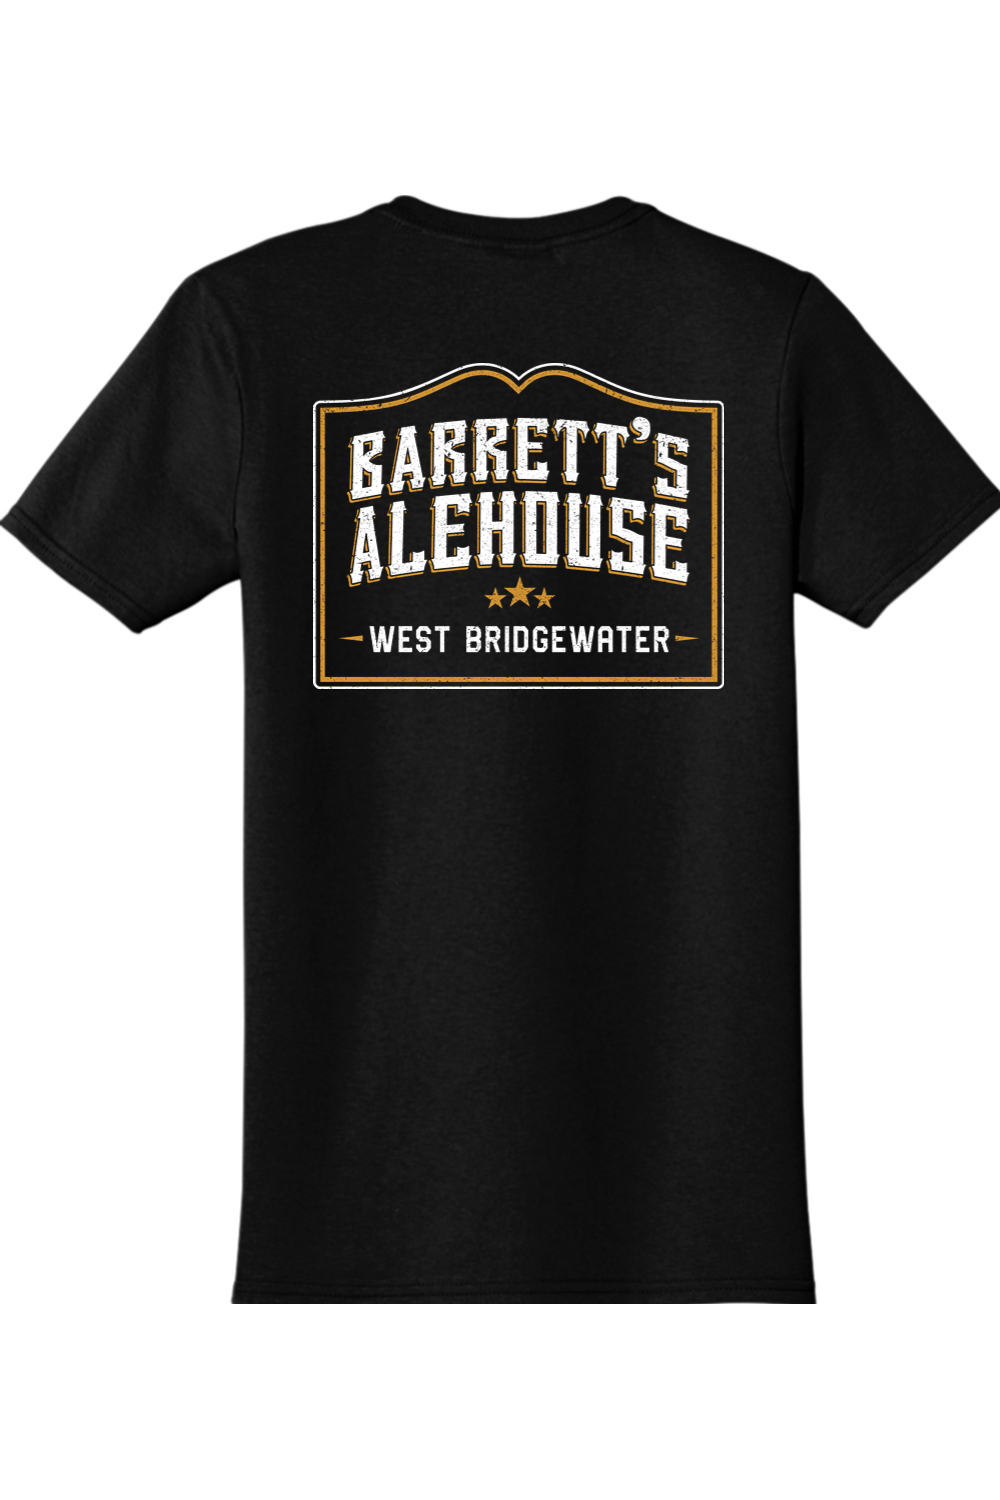 Barrett's Alehouse West Bridgewater T-Shirt